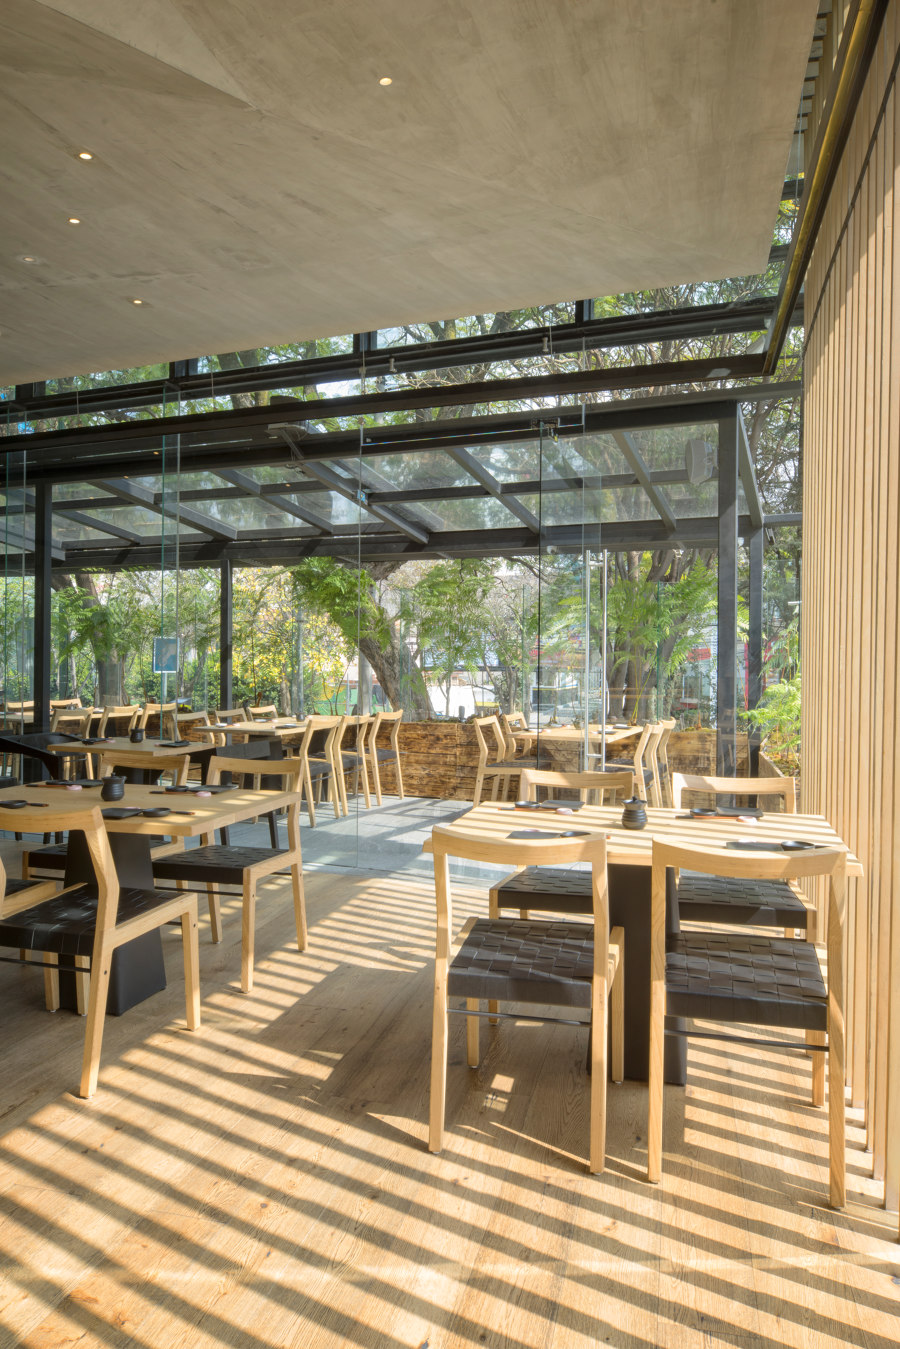 Oku Restaurant de Michan Architecture | Diseño de restaurantes